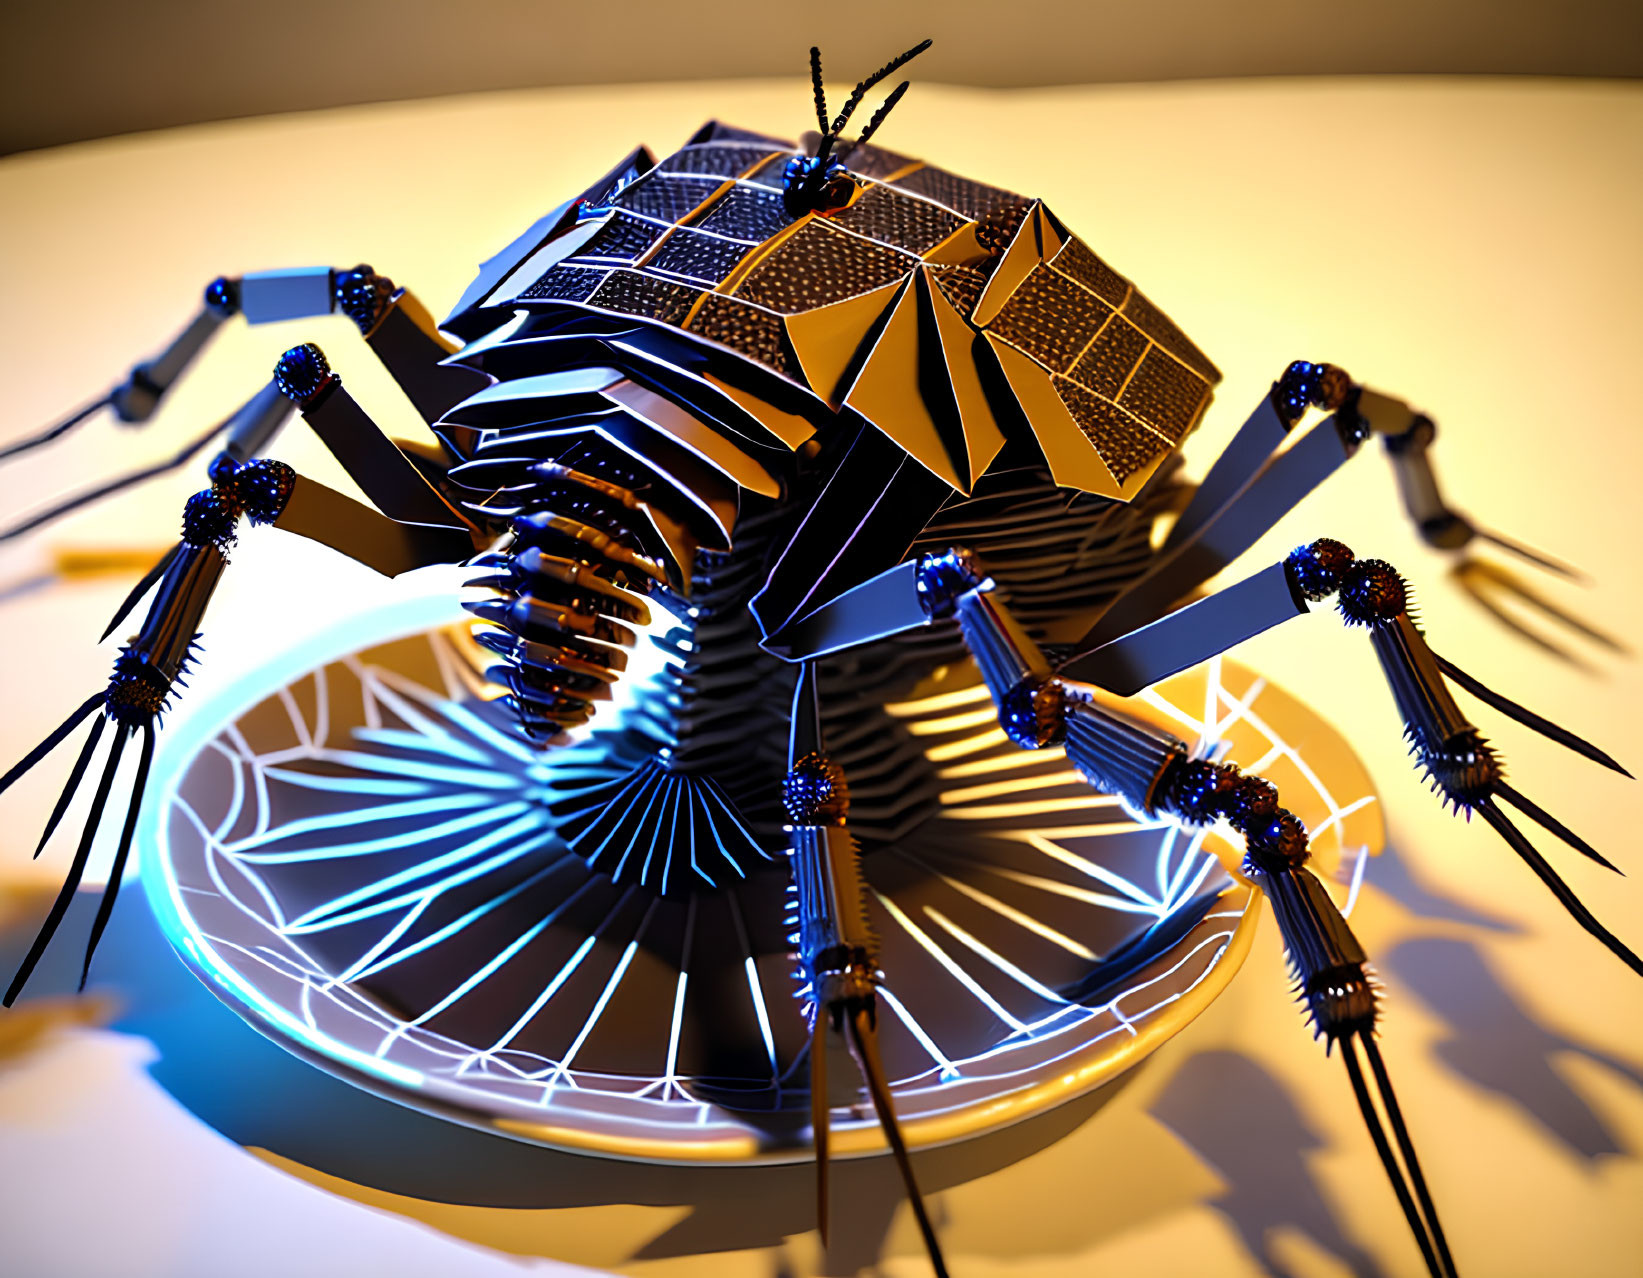 Futuristic spider-like robot with solar panels on circular platform